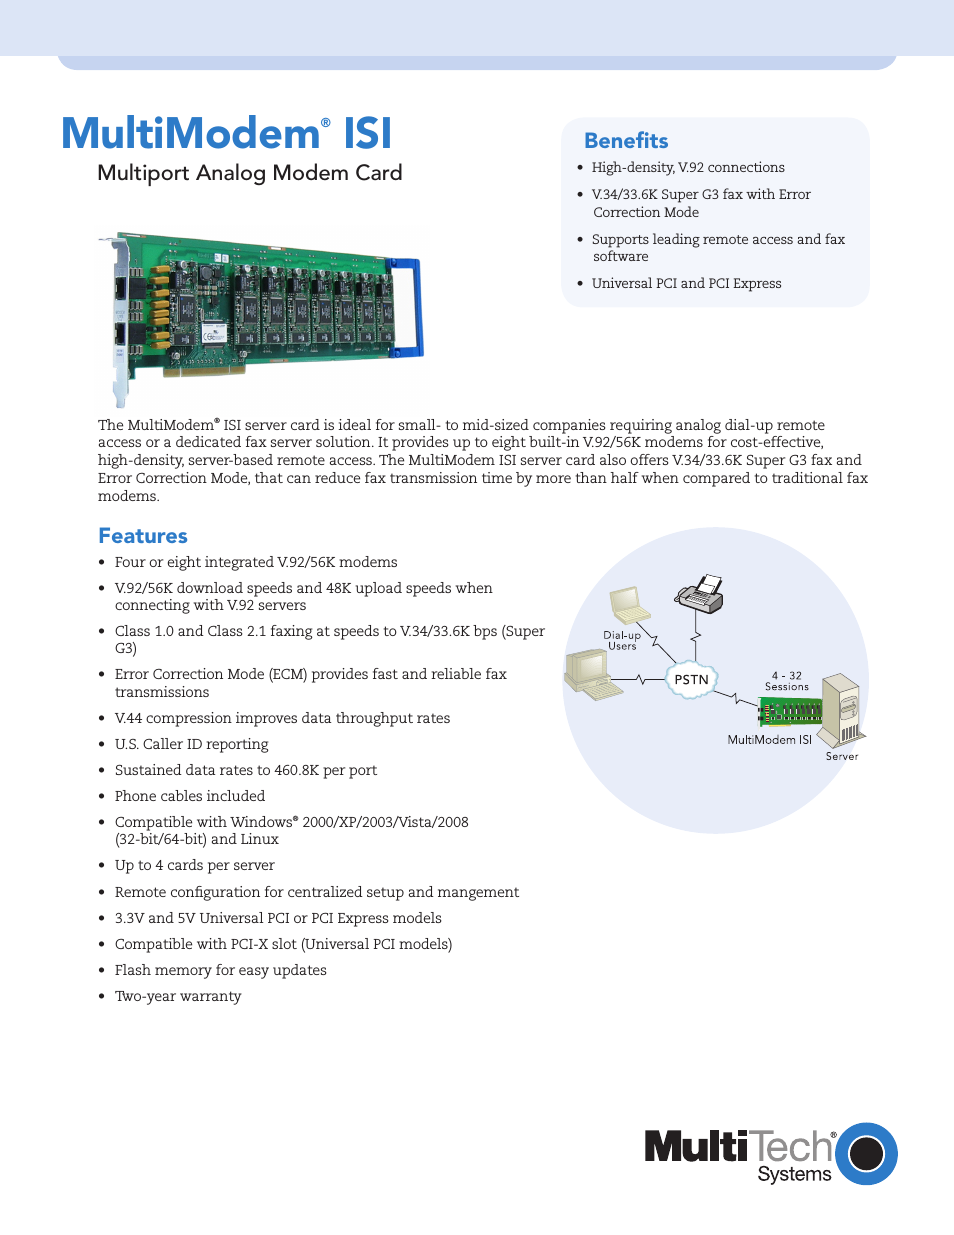 Multiport Analog Modem Card MultiModem ISI